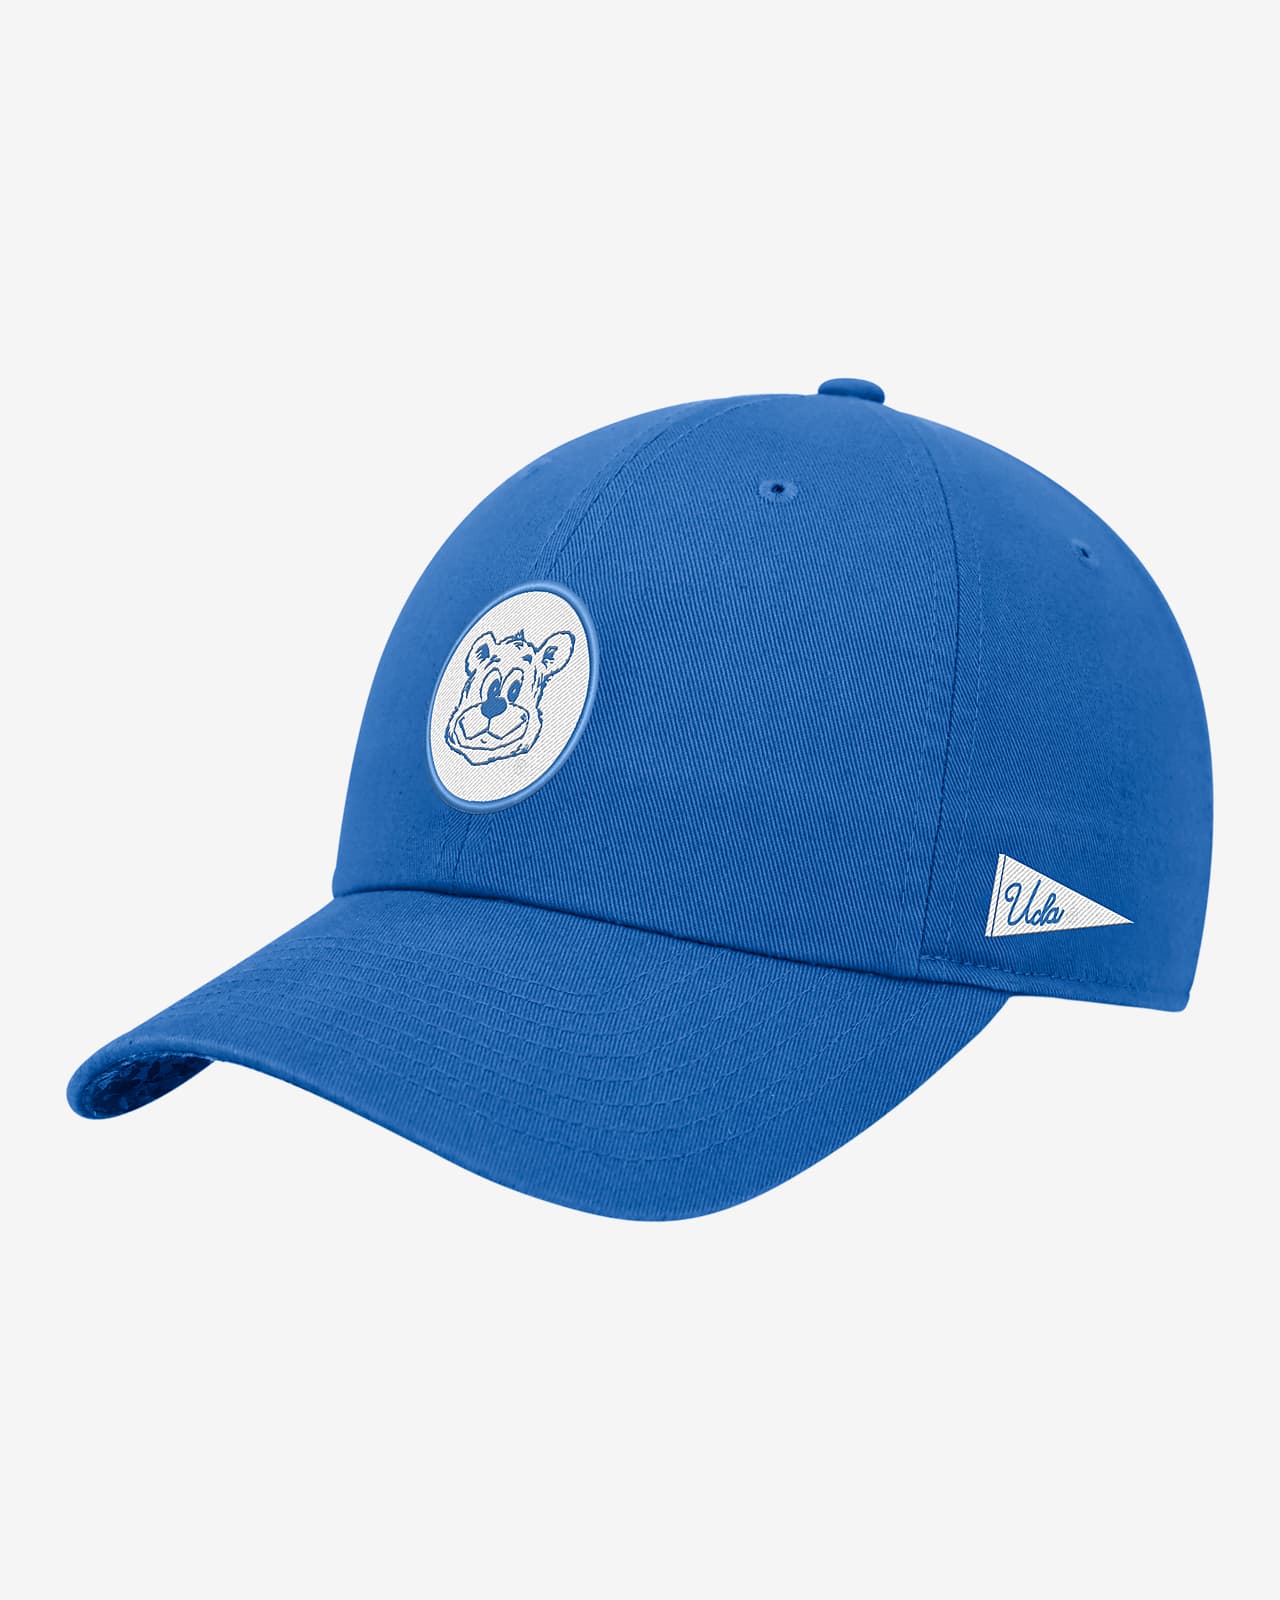 UCLA Logo Nike College Adjustable Cap